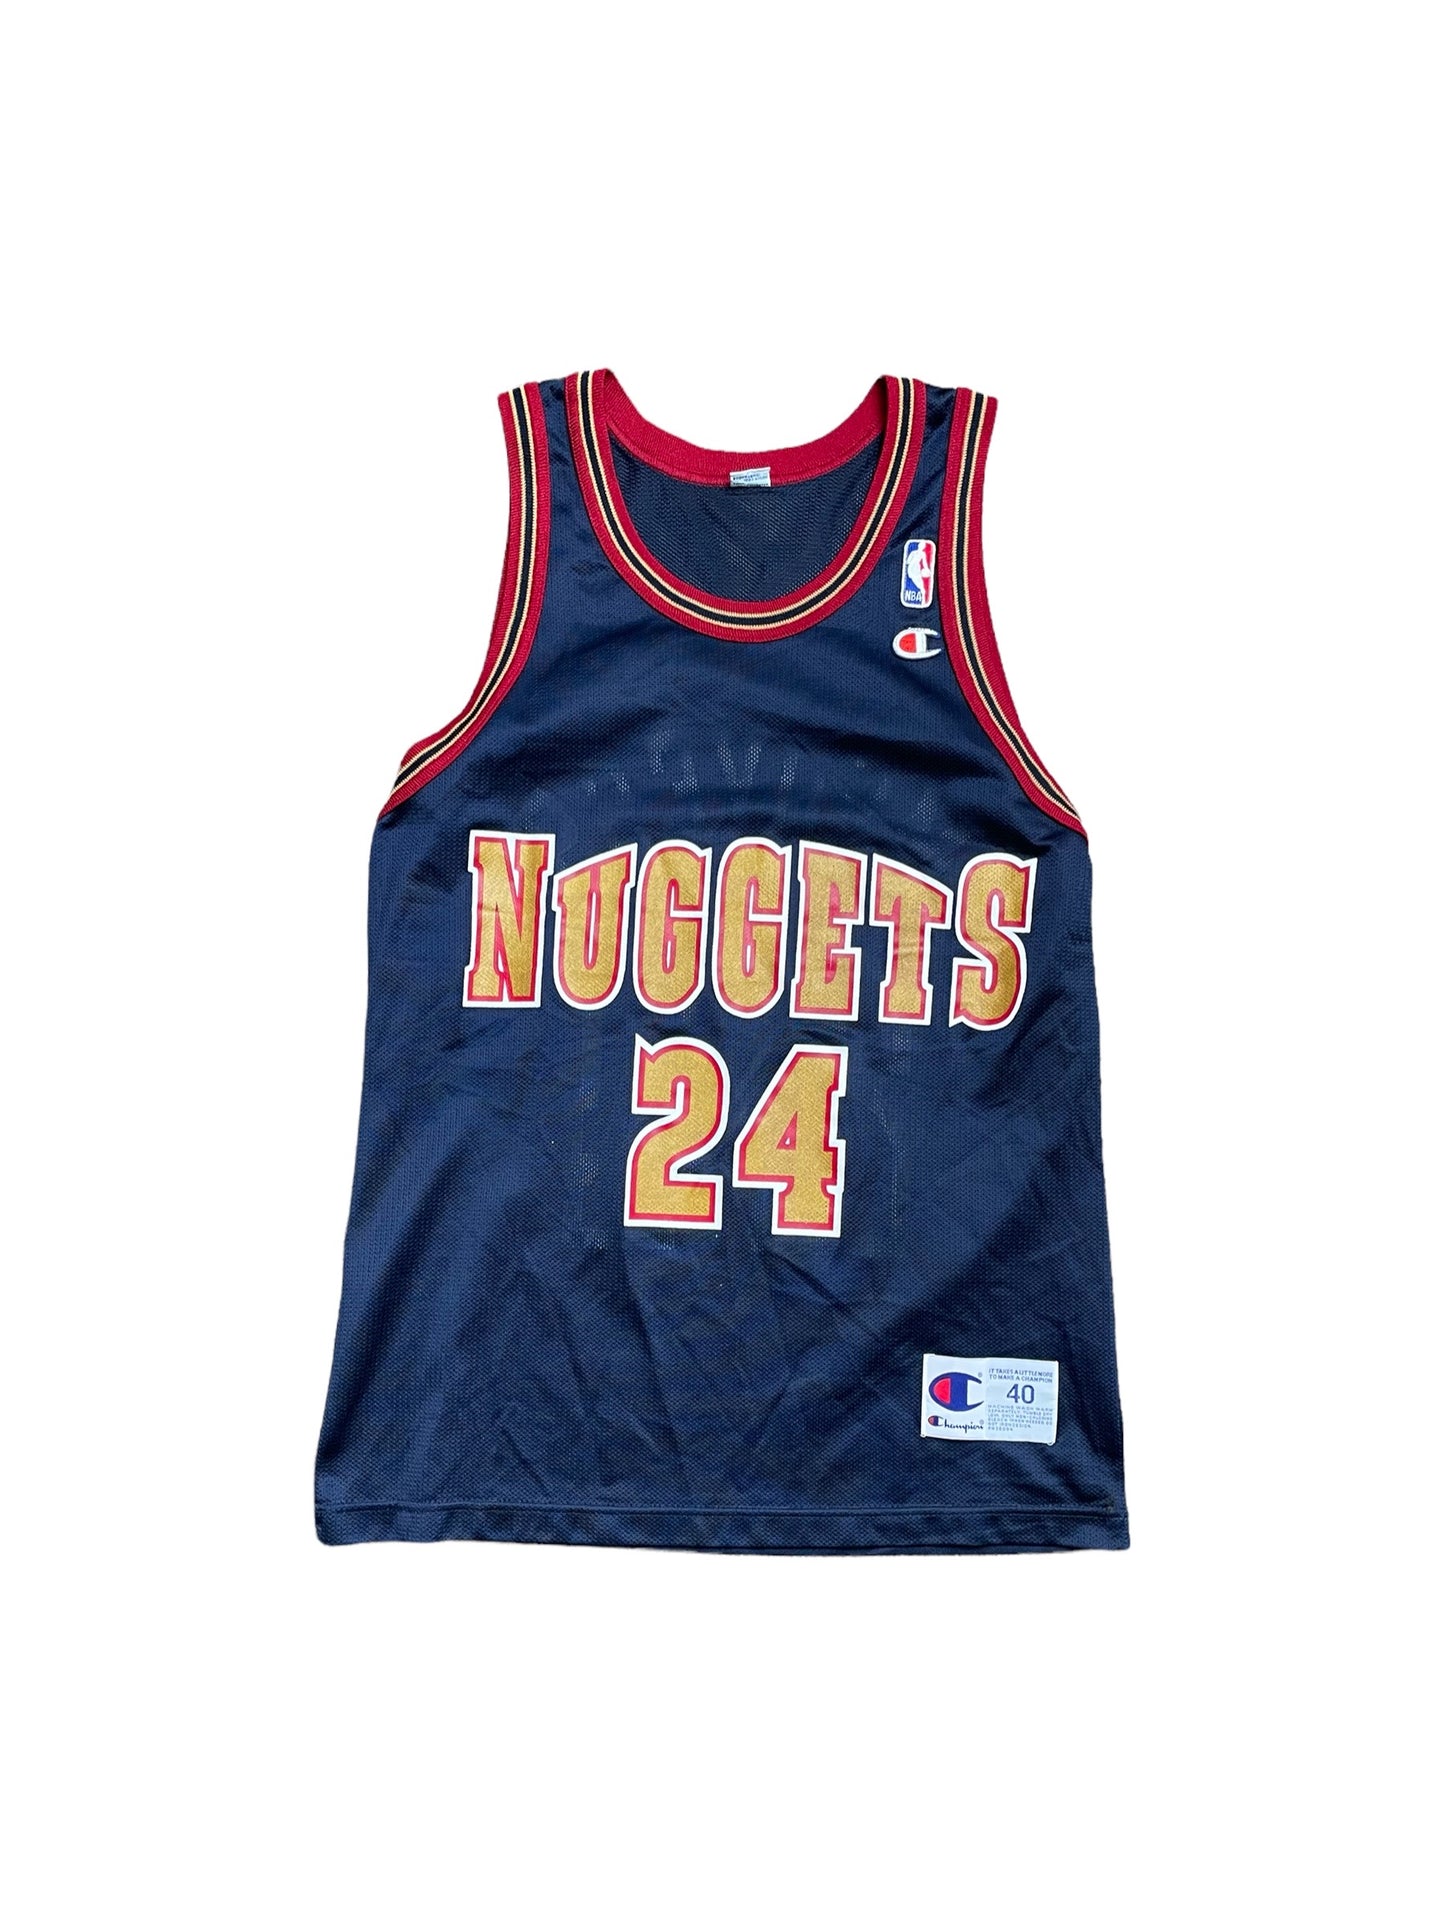 Vintage Denver Nuggets Antonio McDyess #24 NBA Basketball Jersey Medium